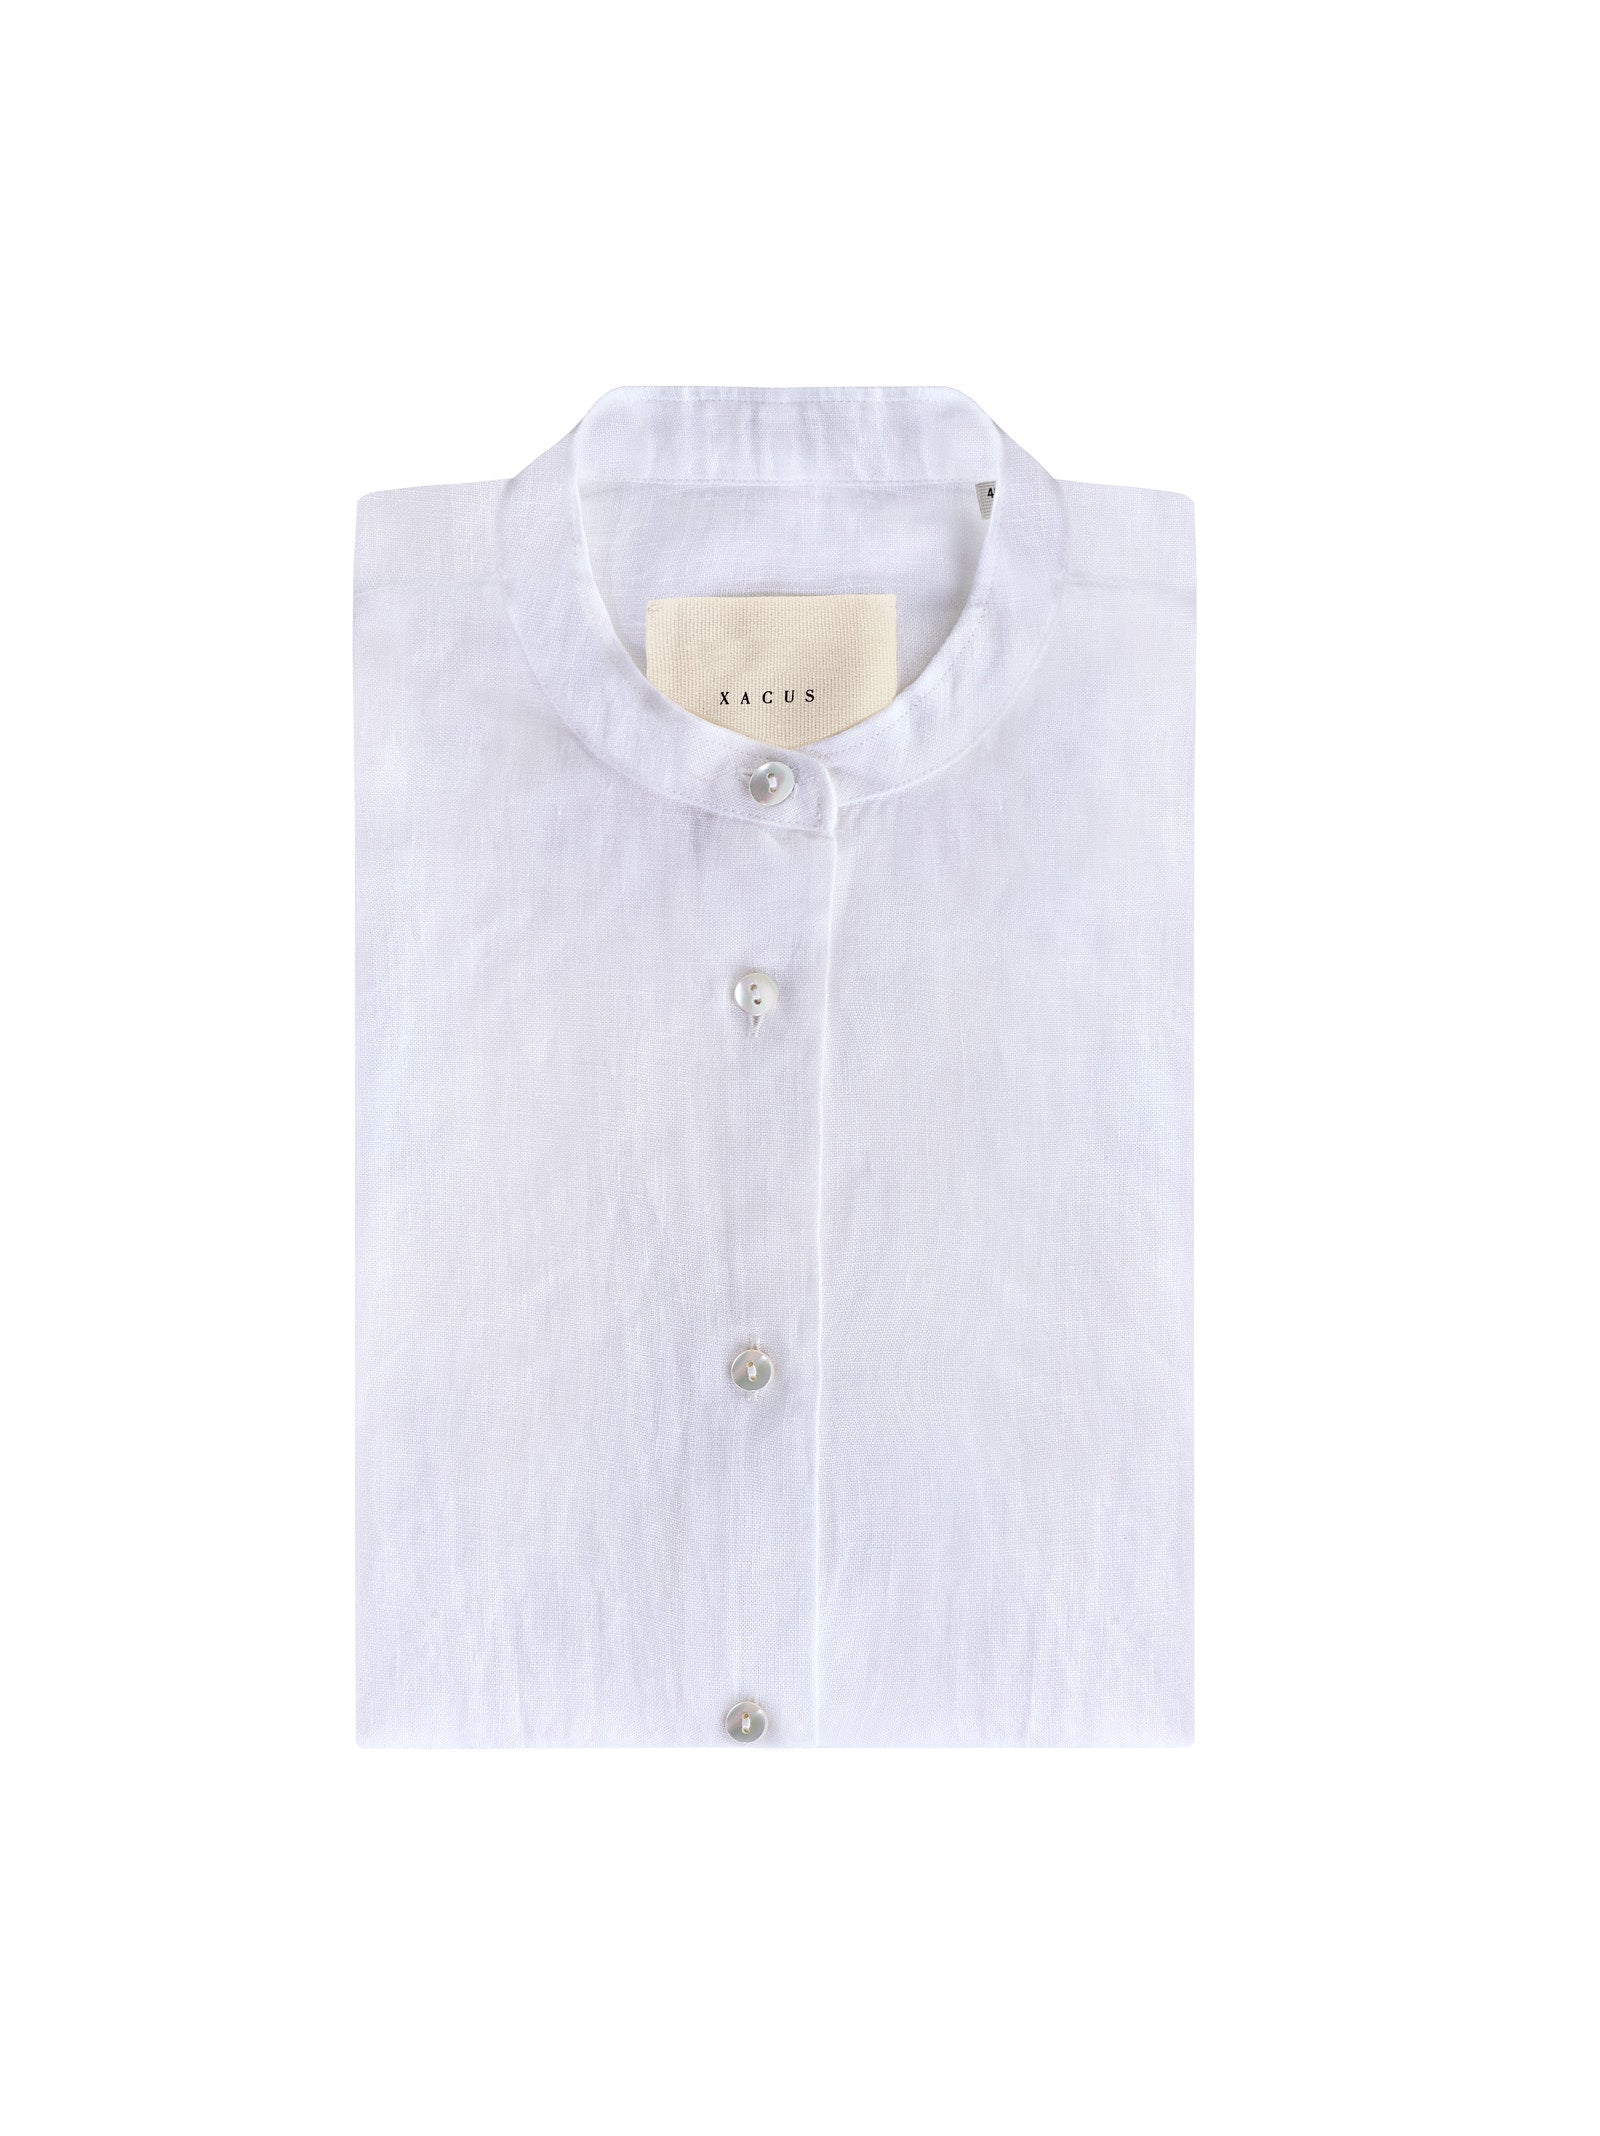 Camicia XACUS Marvi
Bianco